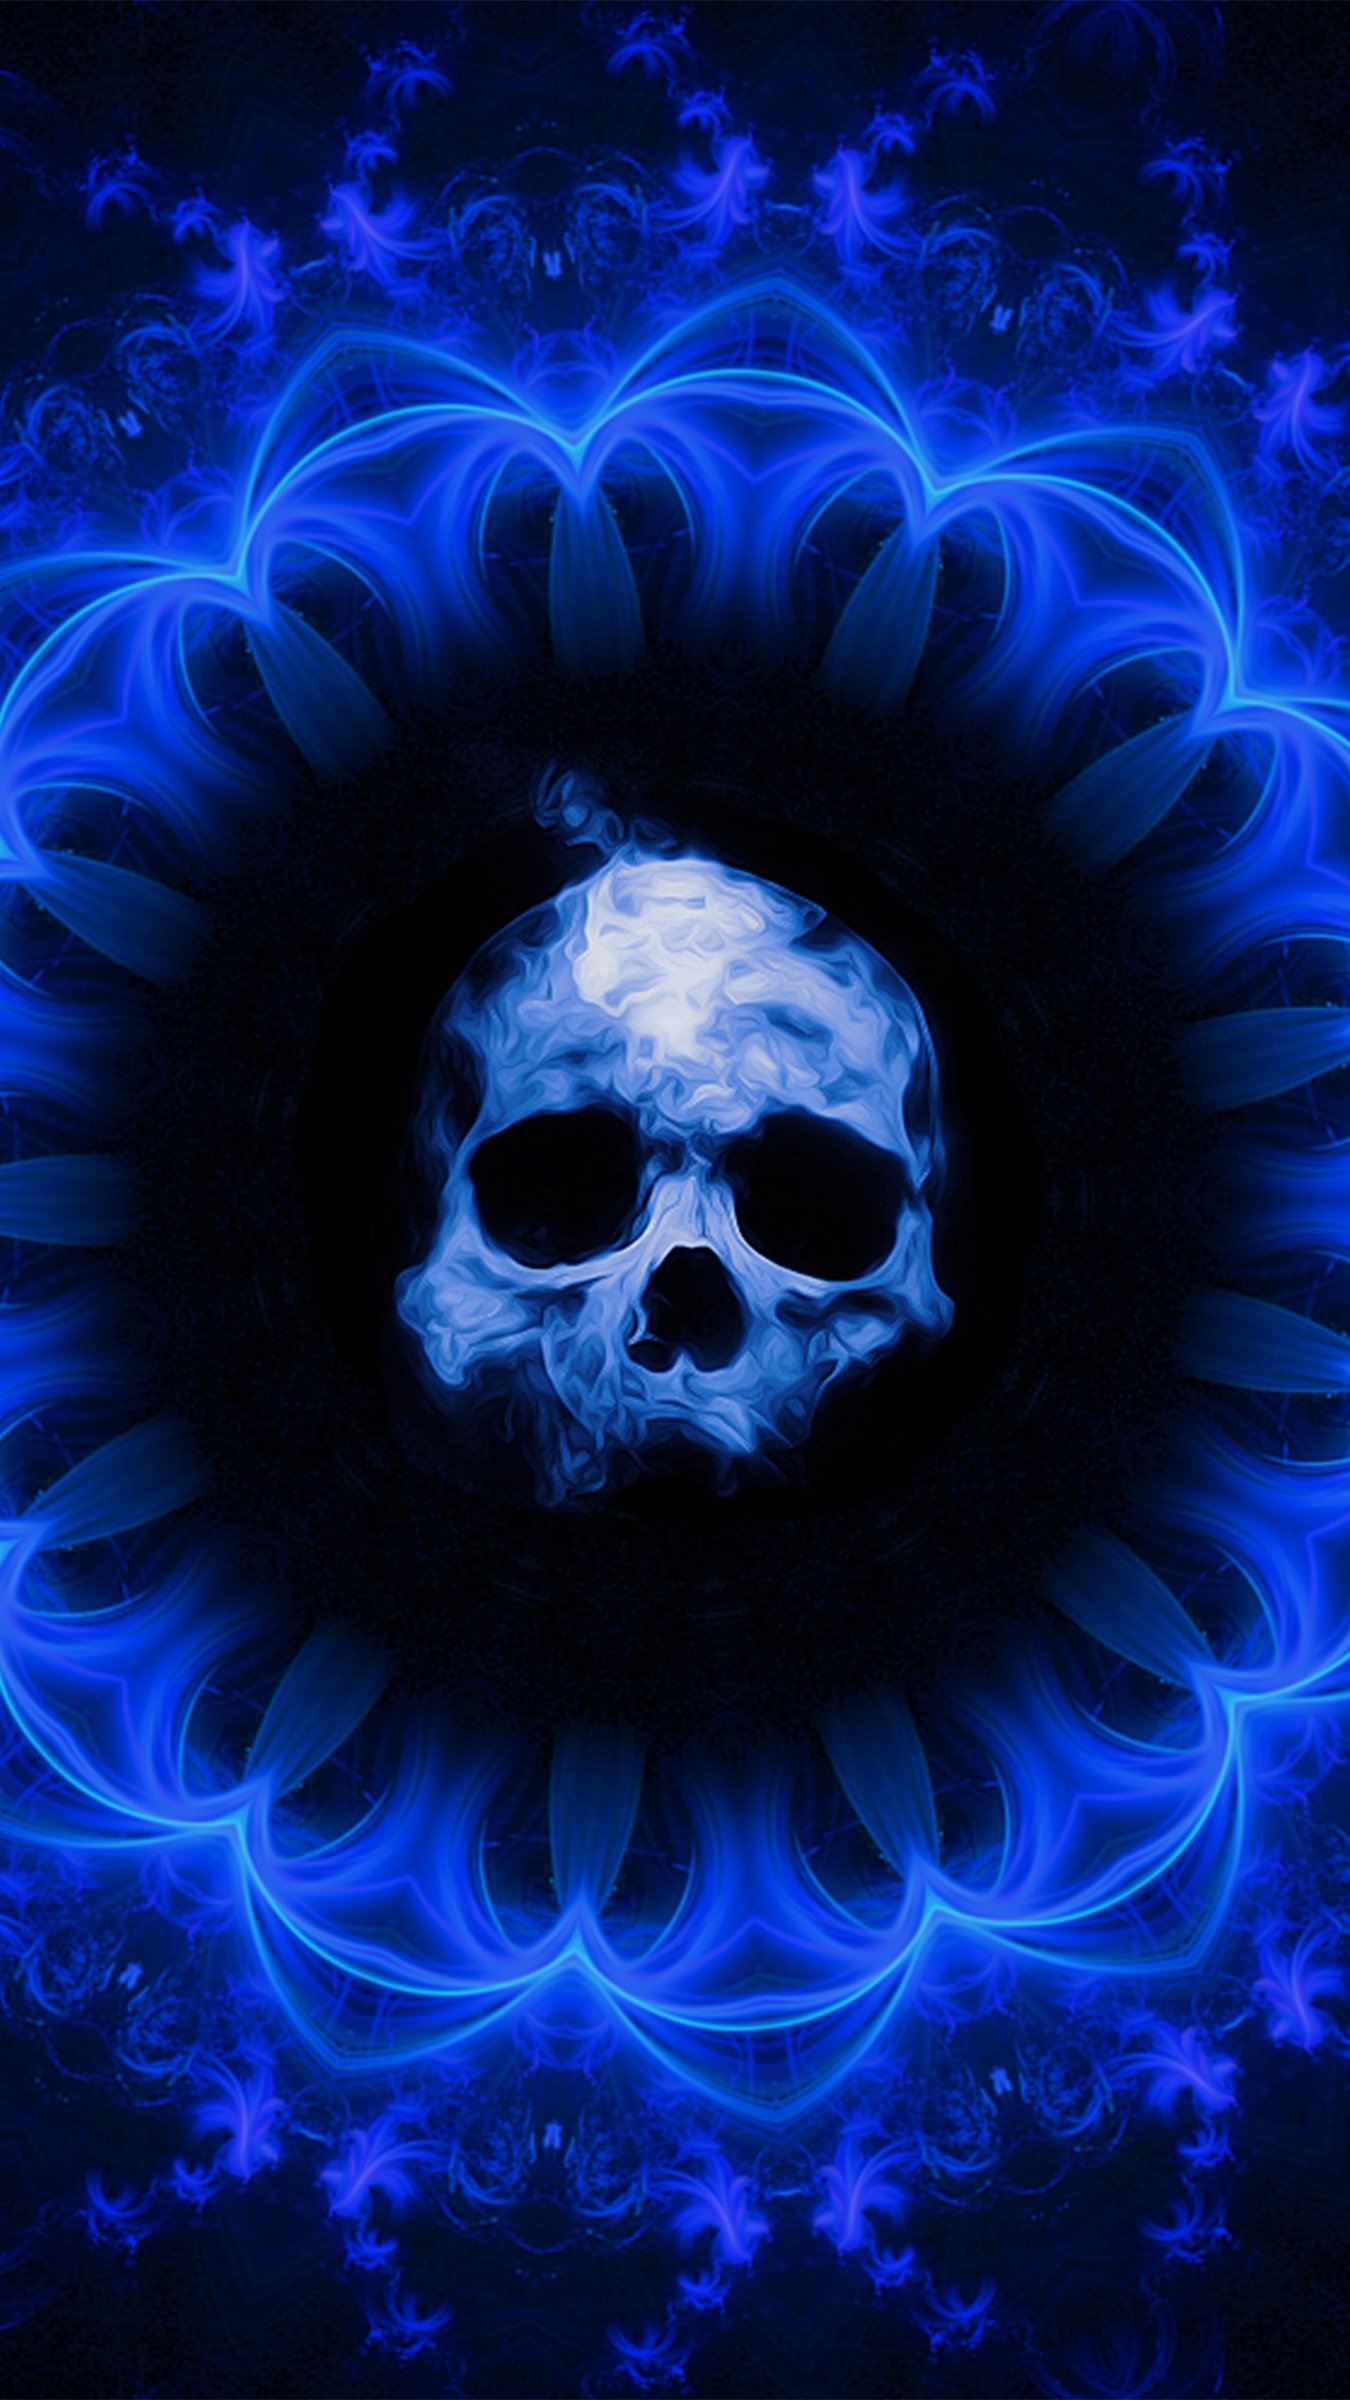 carta da parati gotica,blu,blu elettrico,cranio,acqua,osso